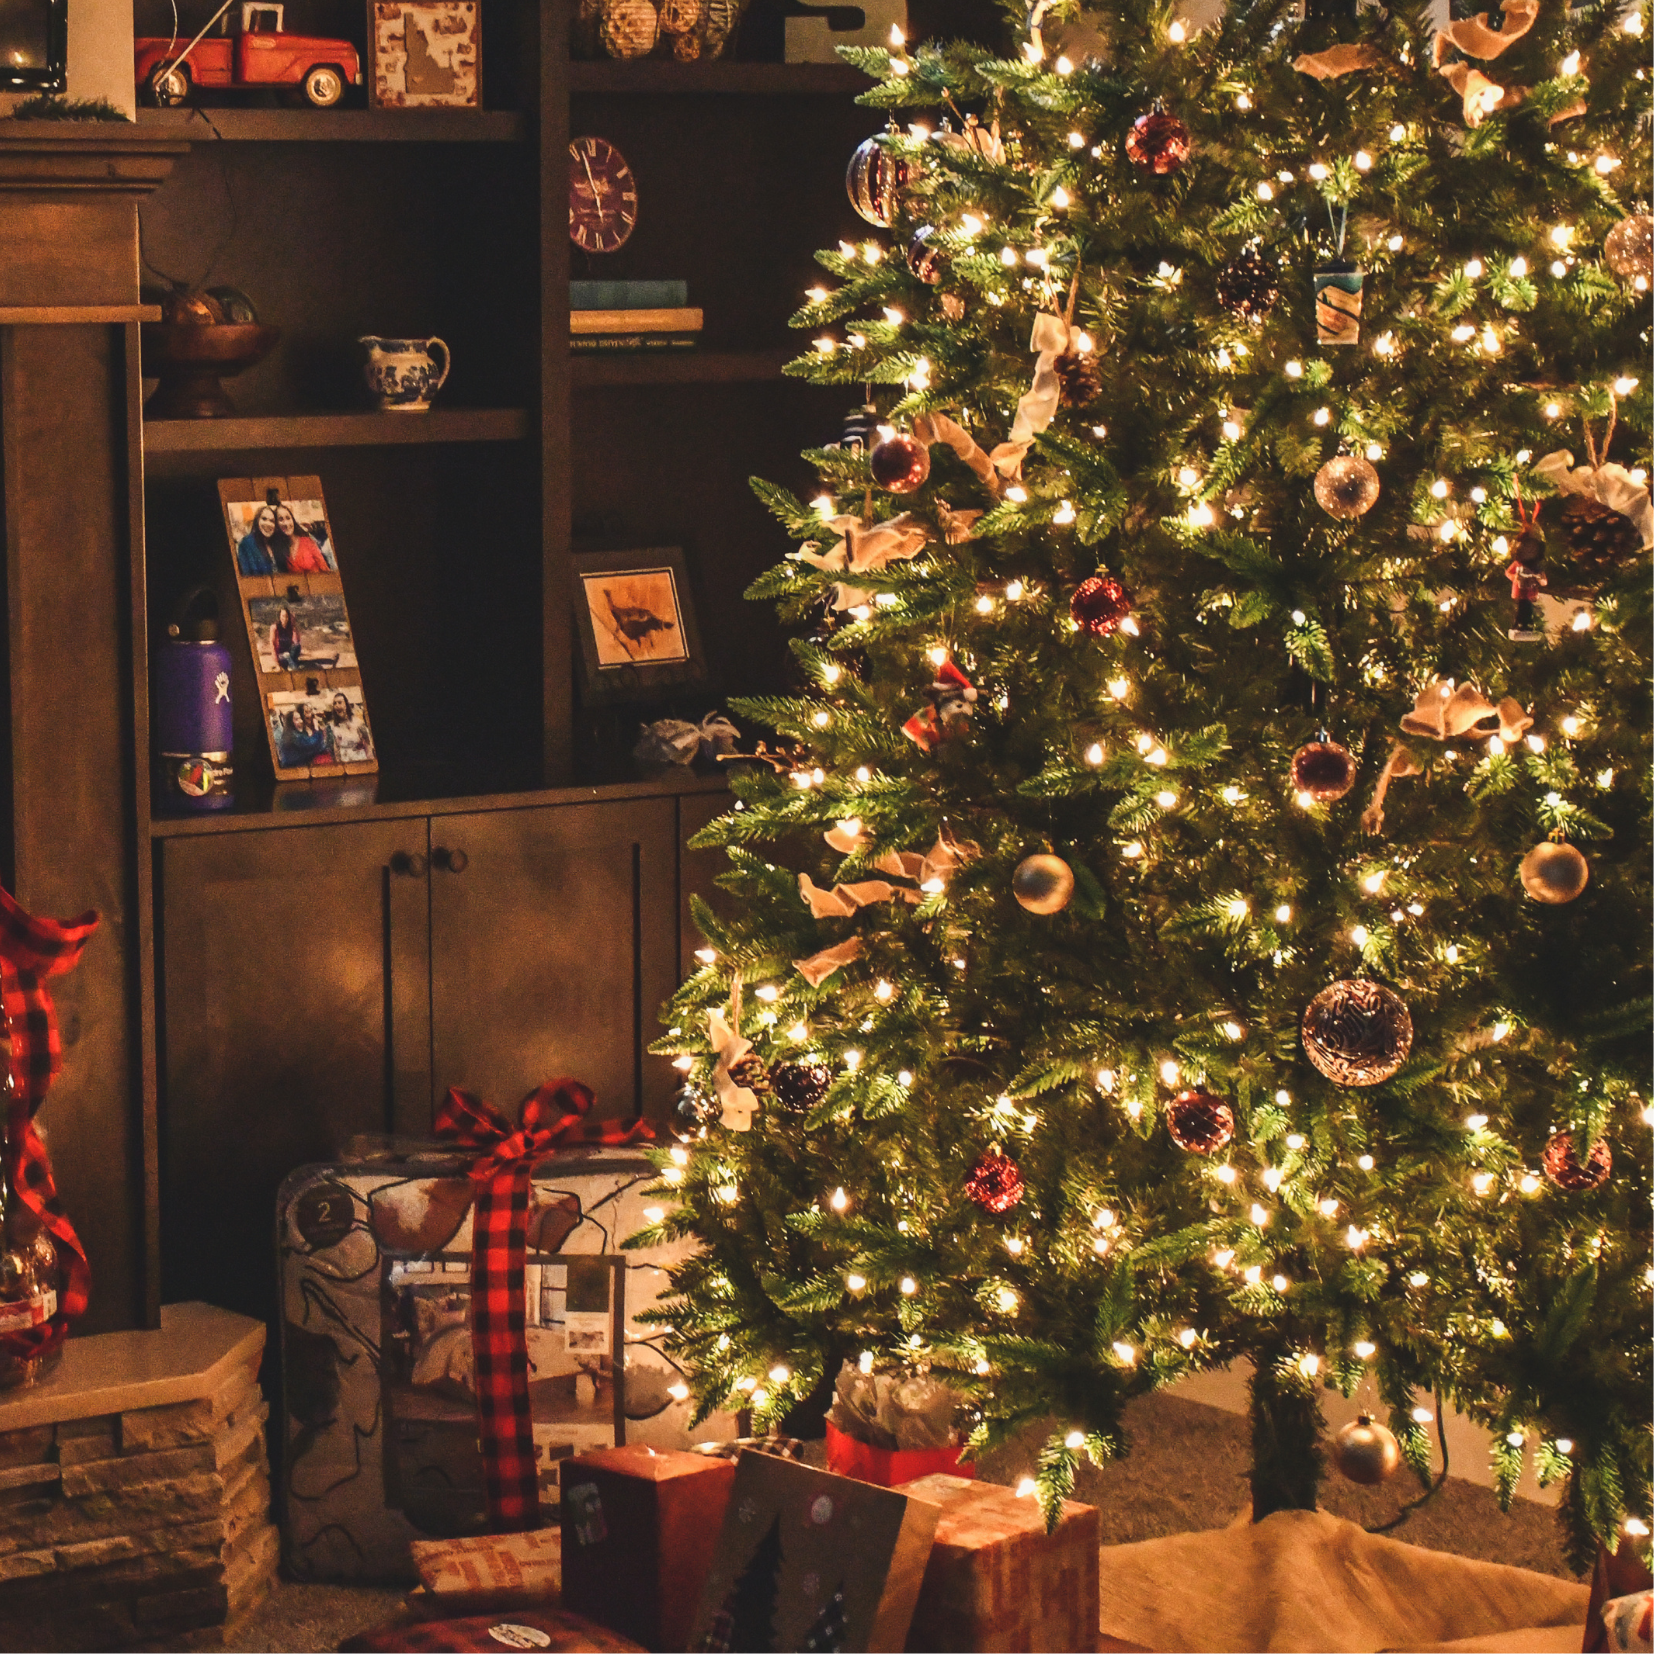 ¿Debe usarse "merry" o "happy" christmas?